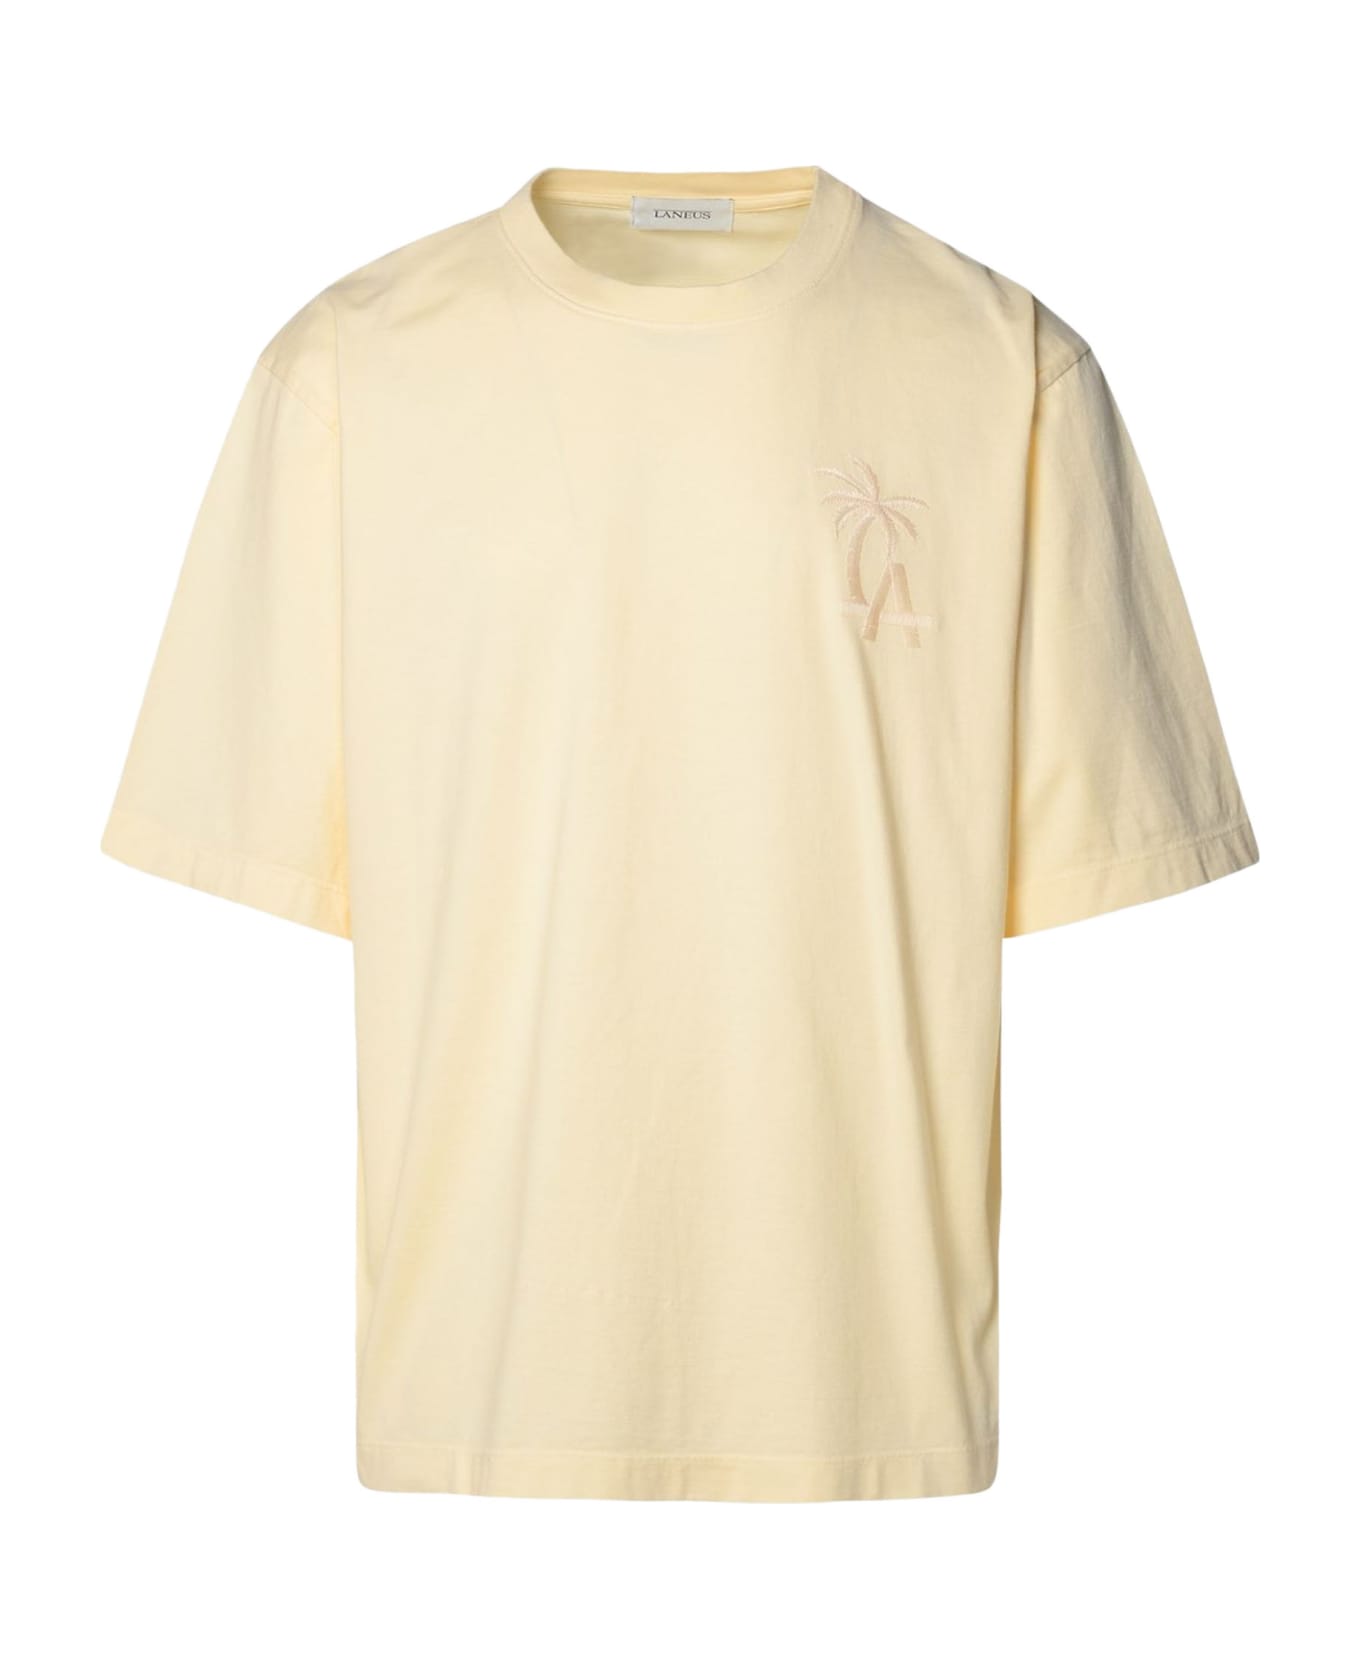 Laneus Embroidered T-shirt - Latte